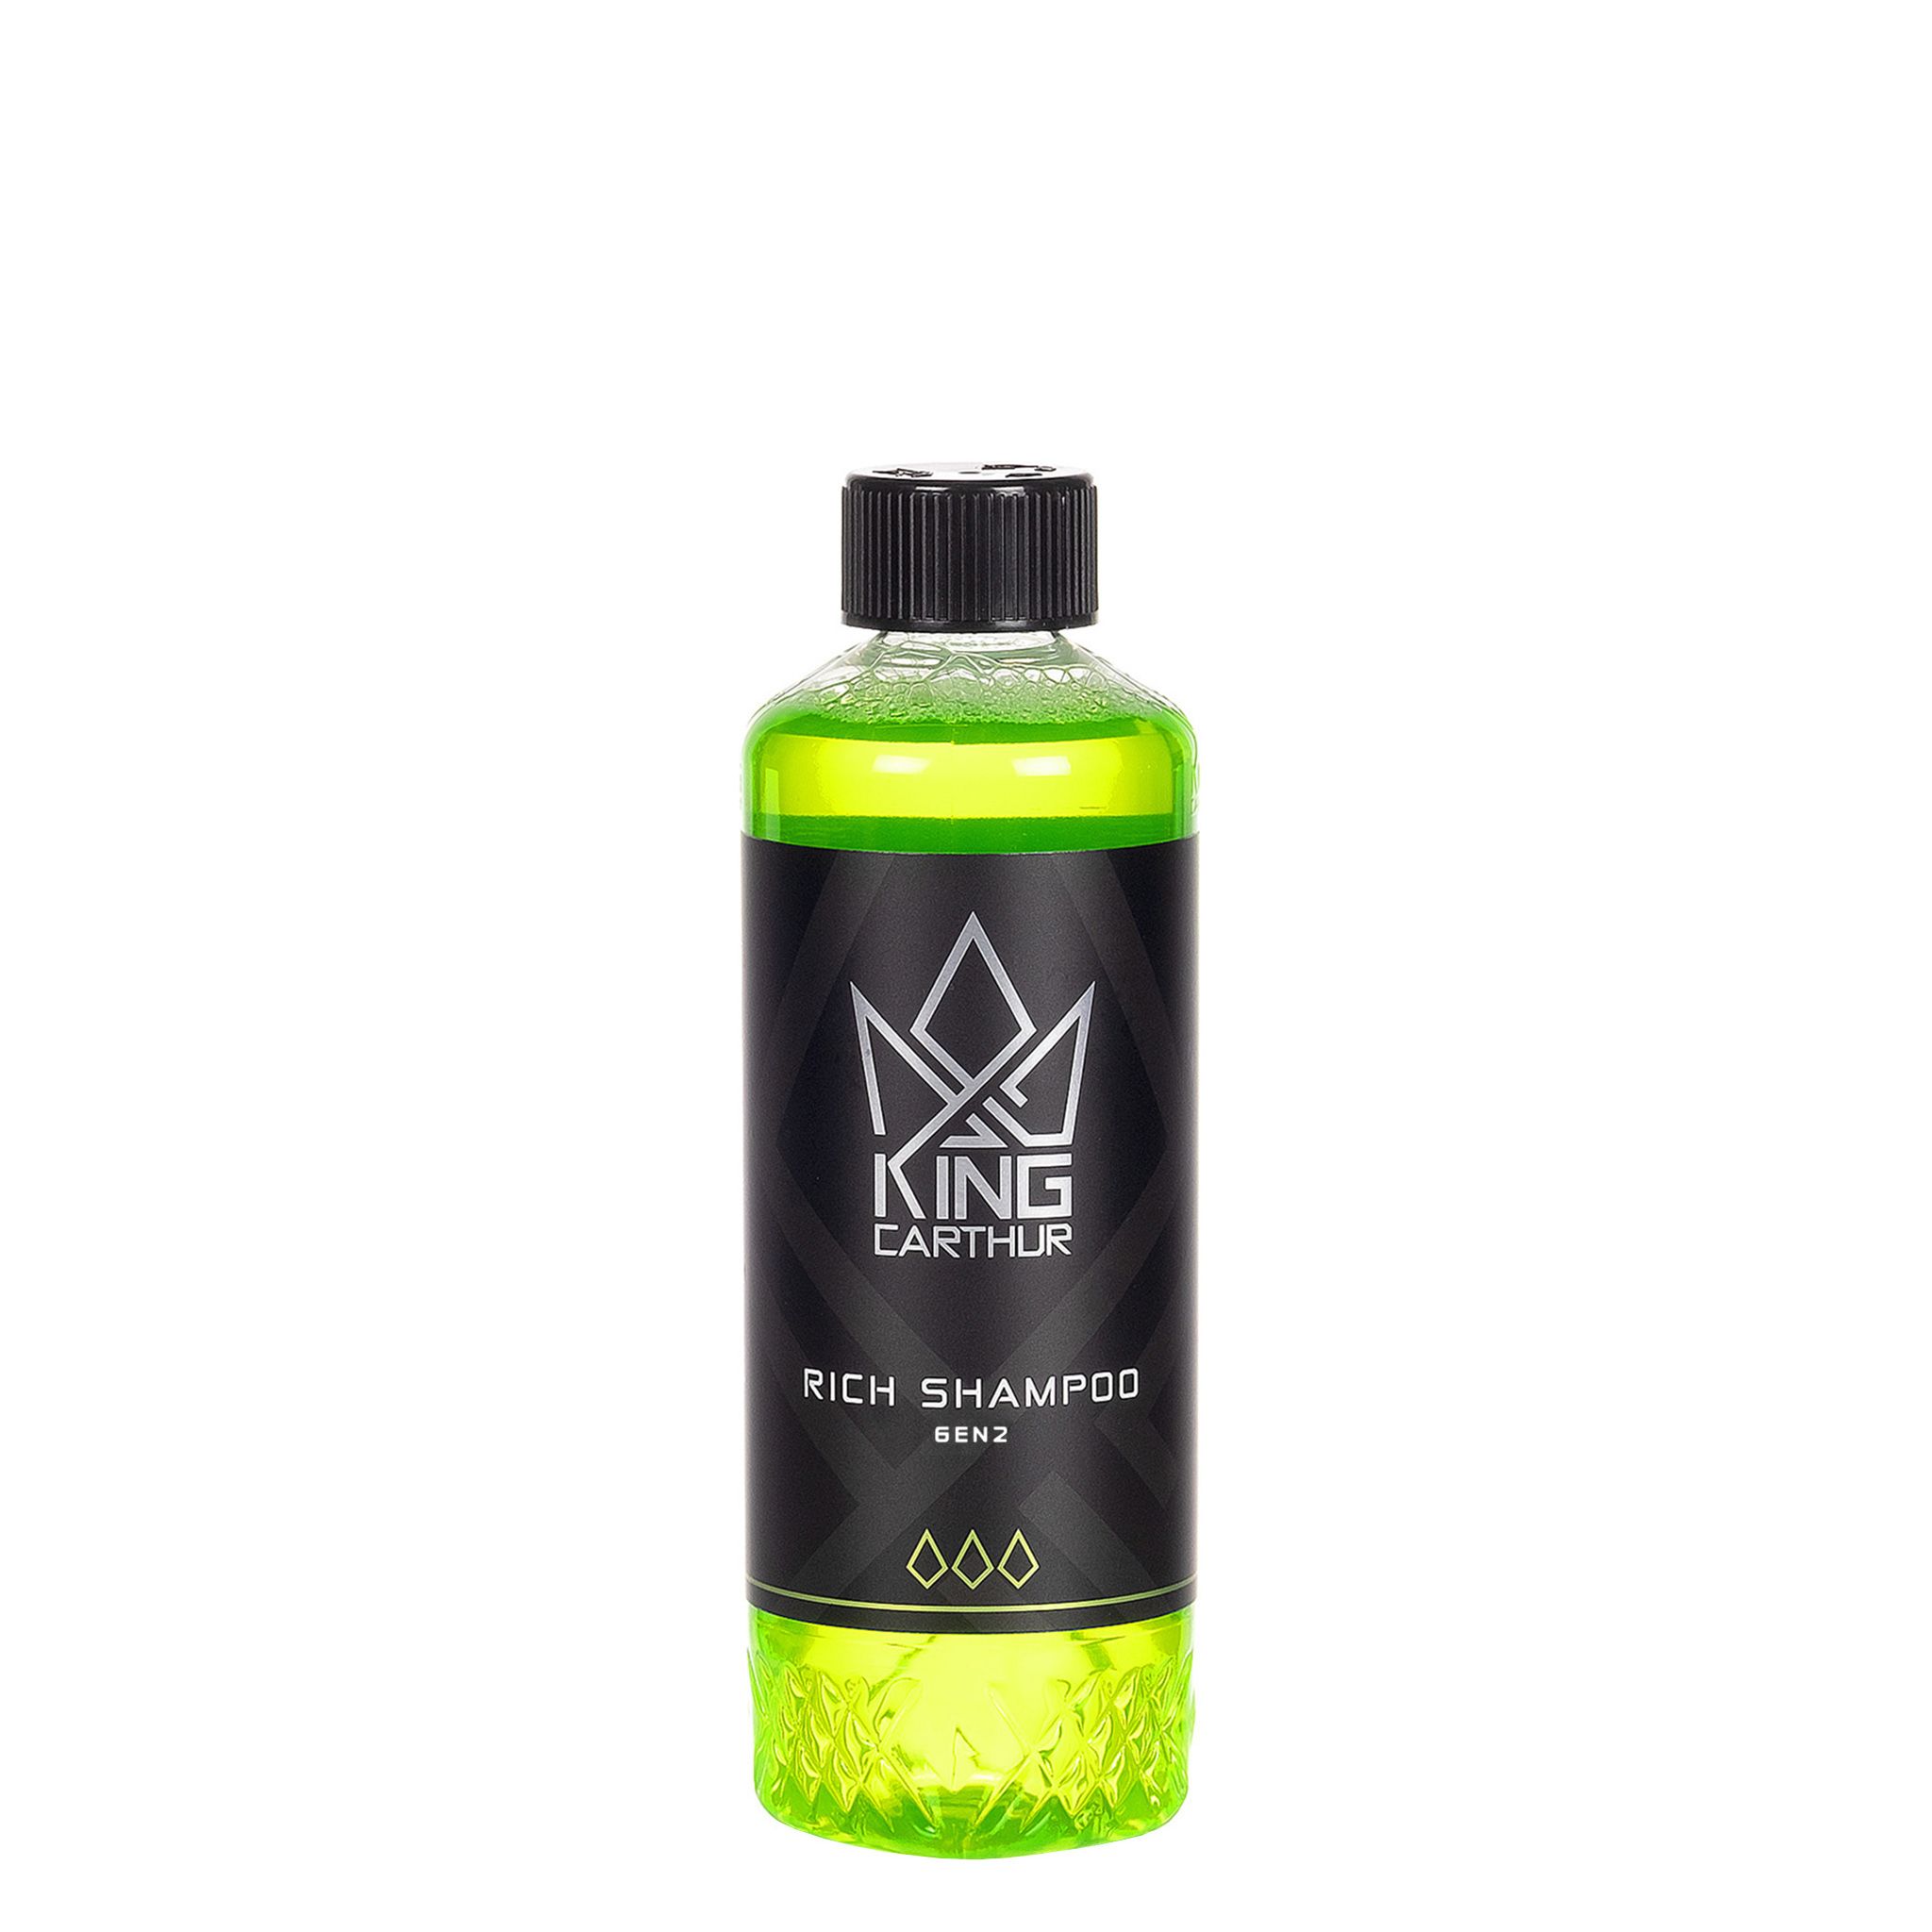 Bilschampo King Carthur Rich Shampoo Gen2, 500 ml, 500 ml